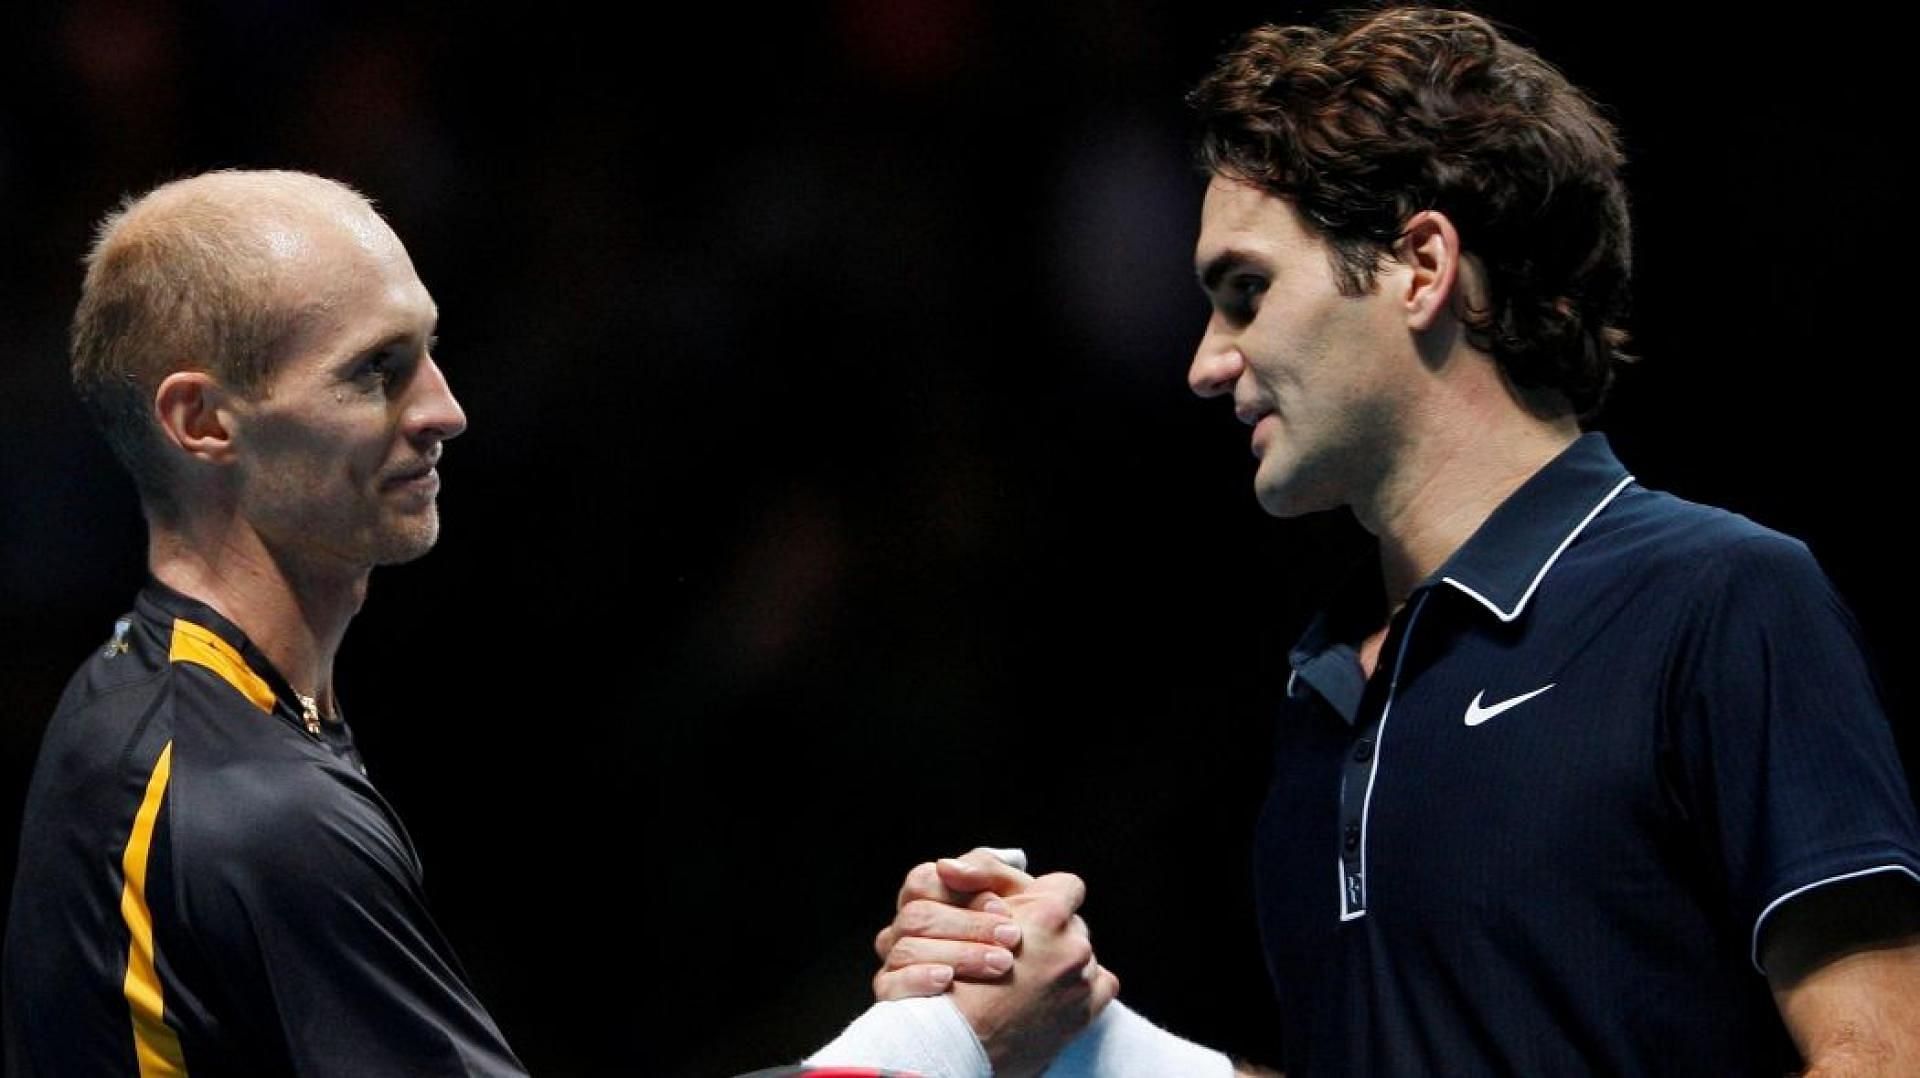 Nikolay Davydenko and Roger Federer after a match